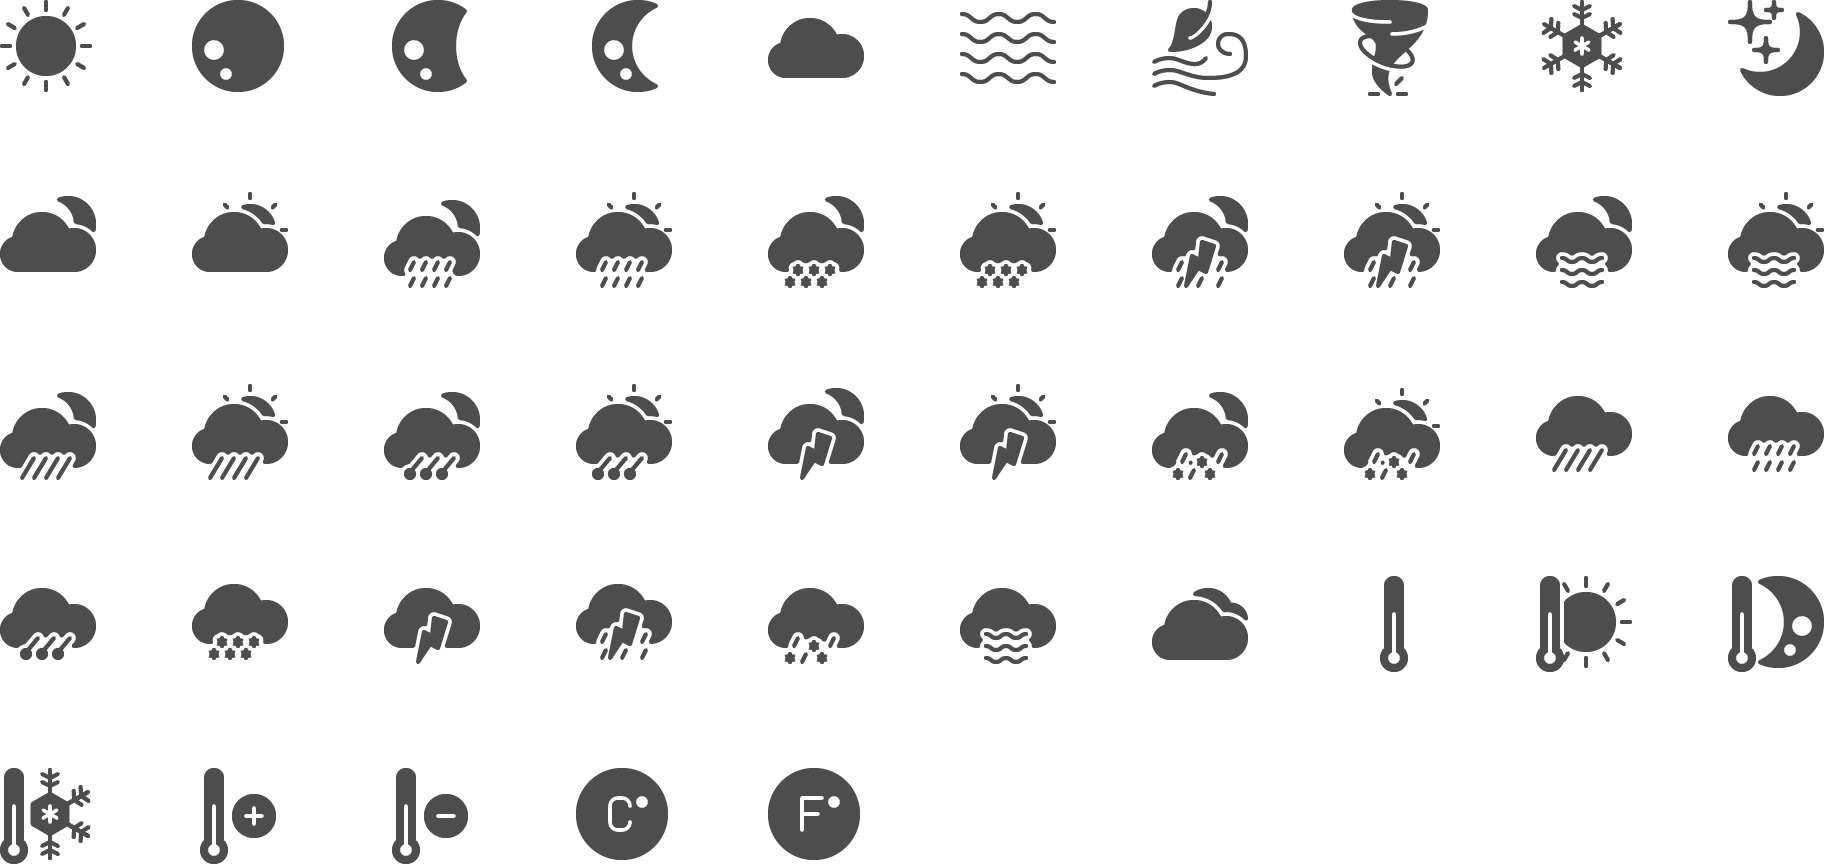 icon Weather